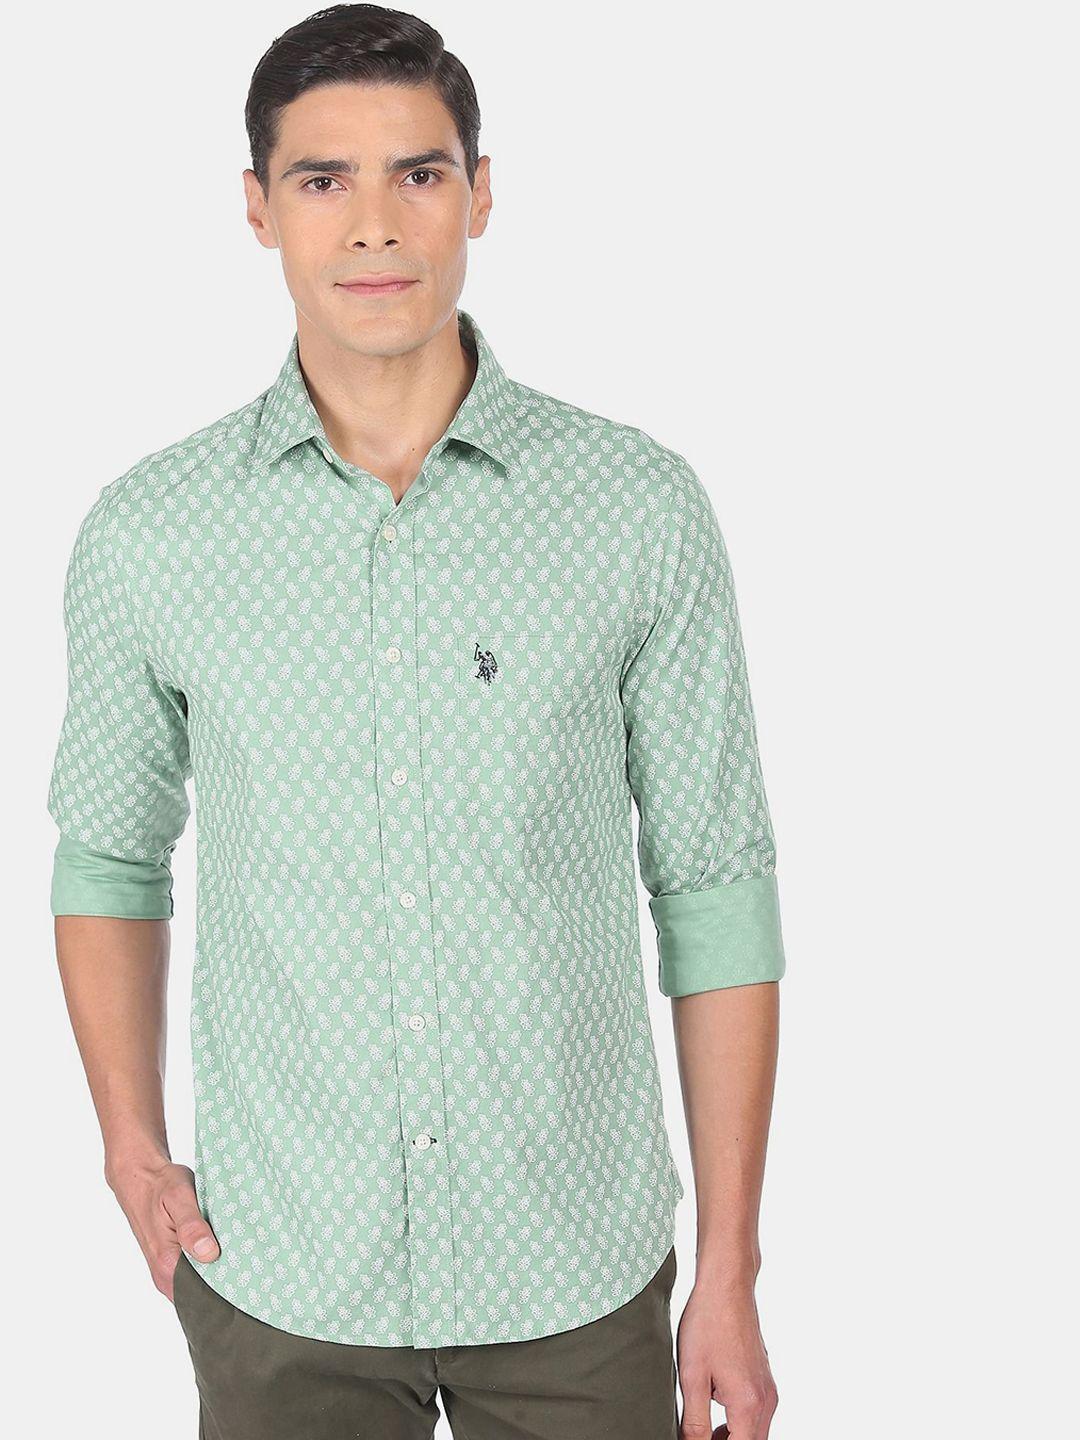 u-s-polo-assn-men-green-regular-fit-floral-printed-cotton-casual-shirt